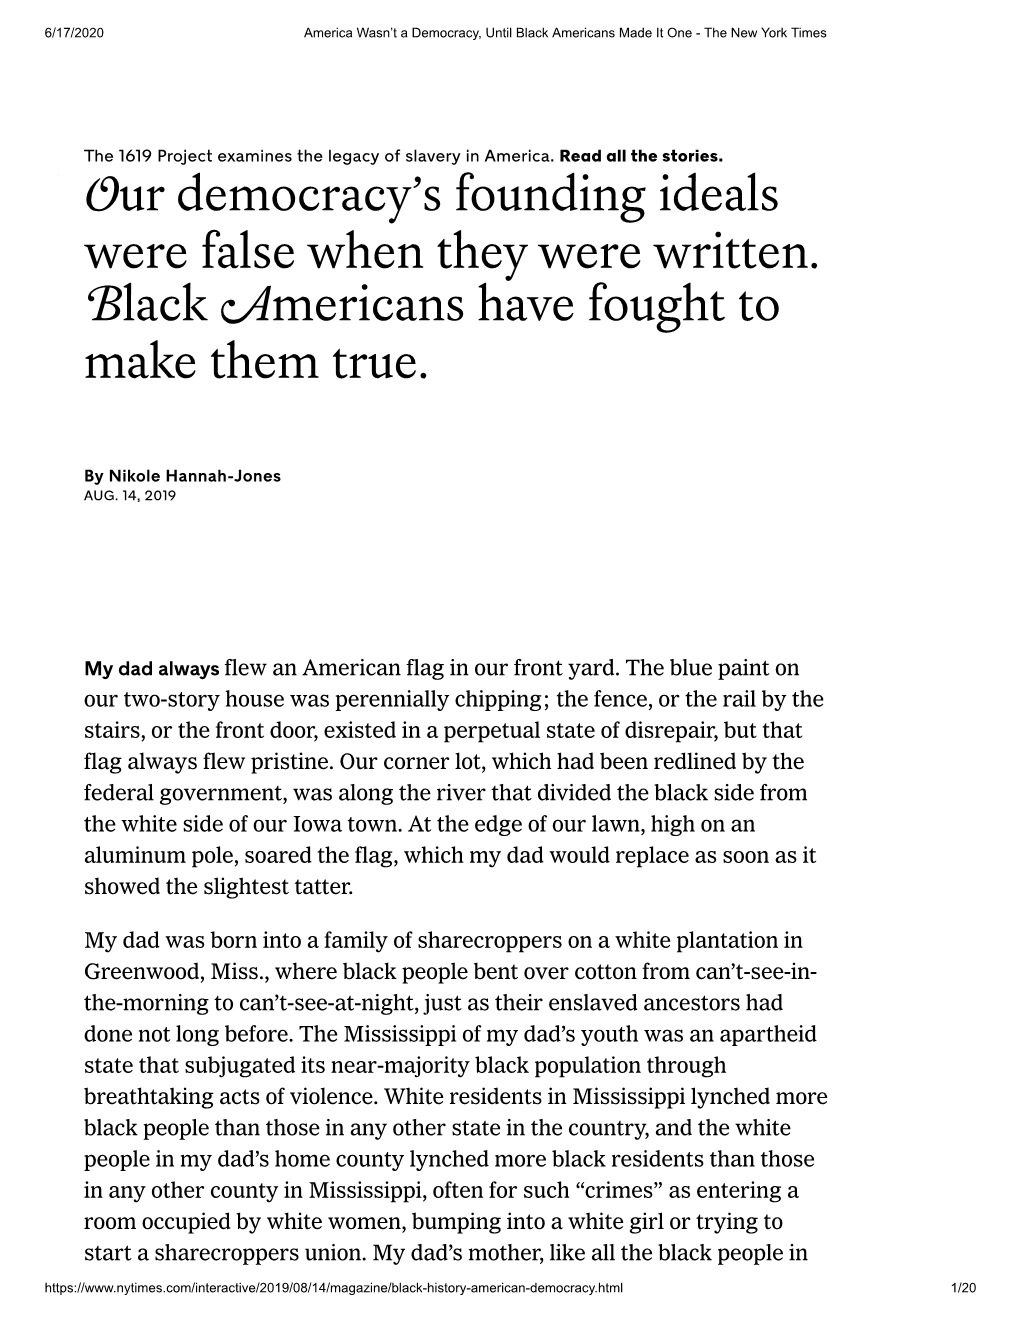 Ur Democracy's Founding Ideals Were False When They Were Written. Lack